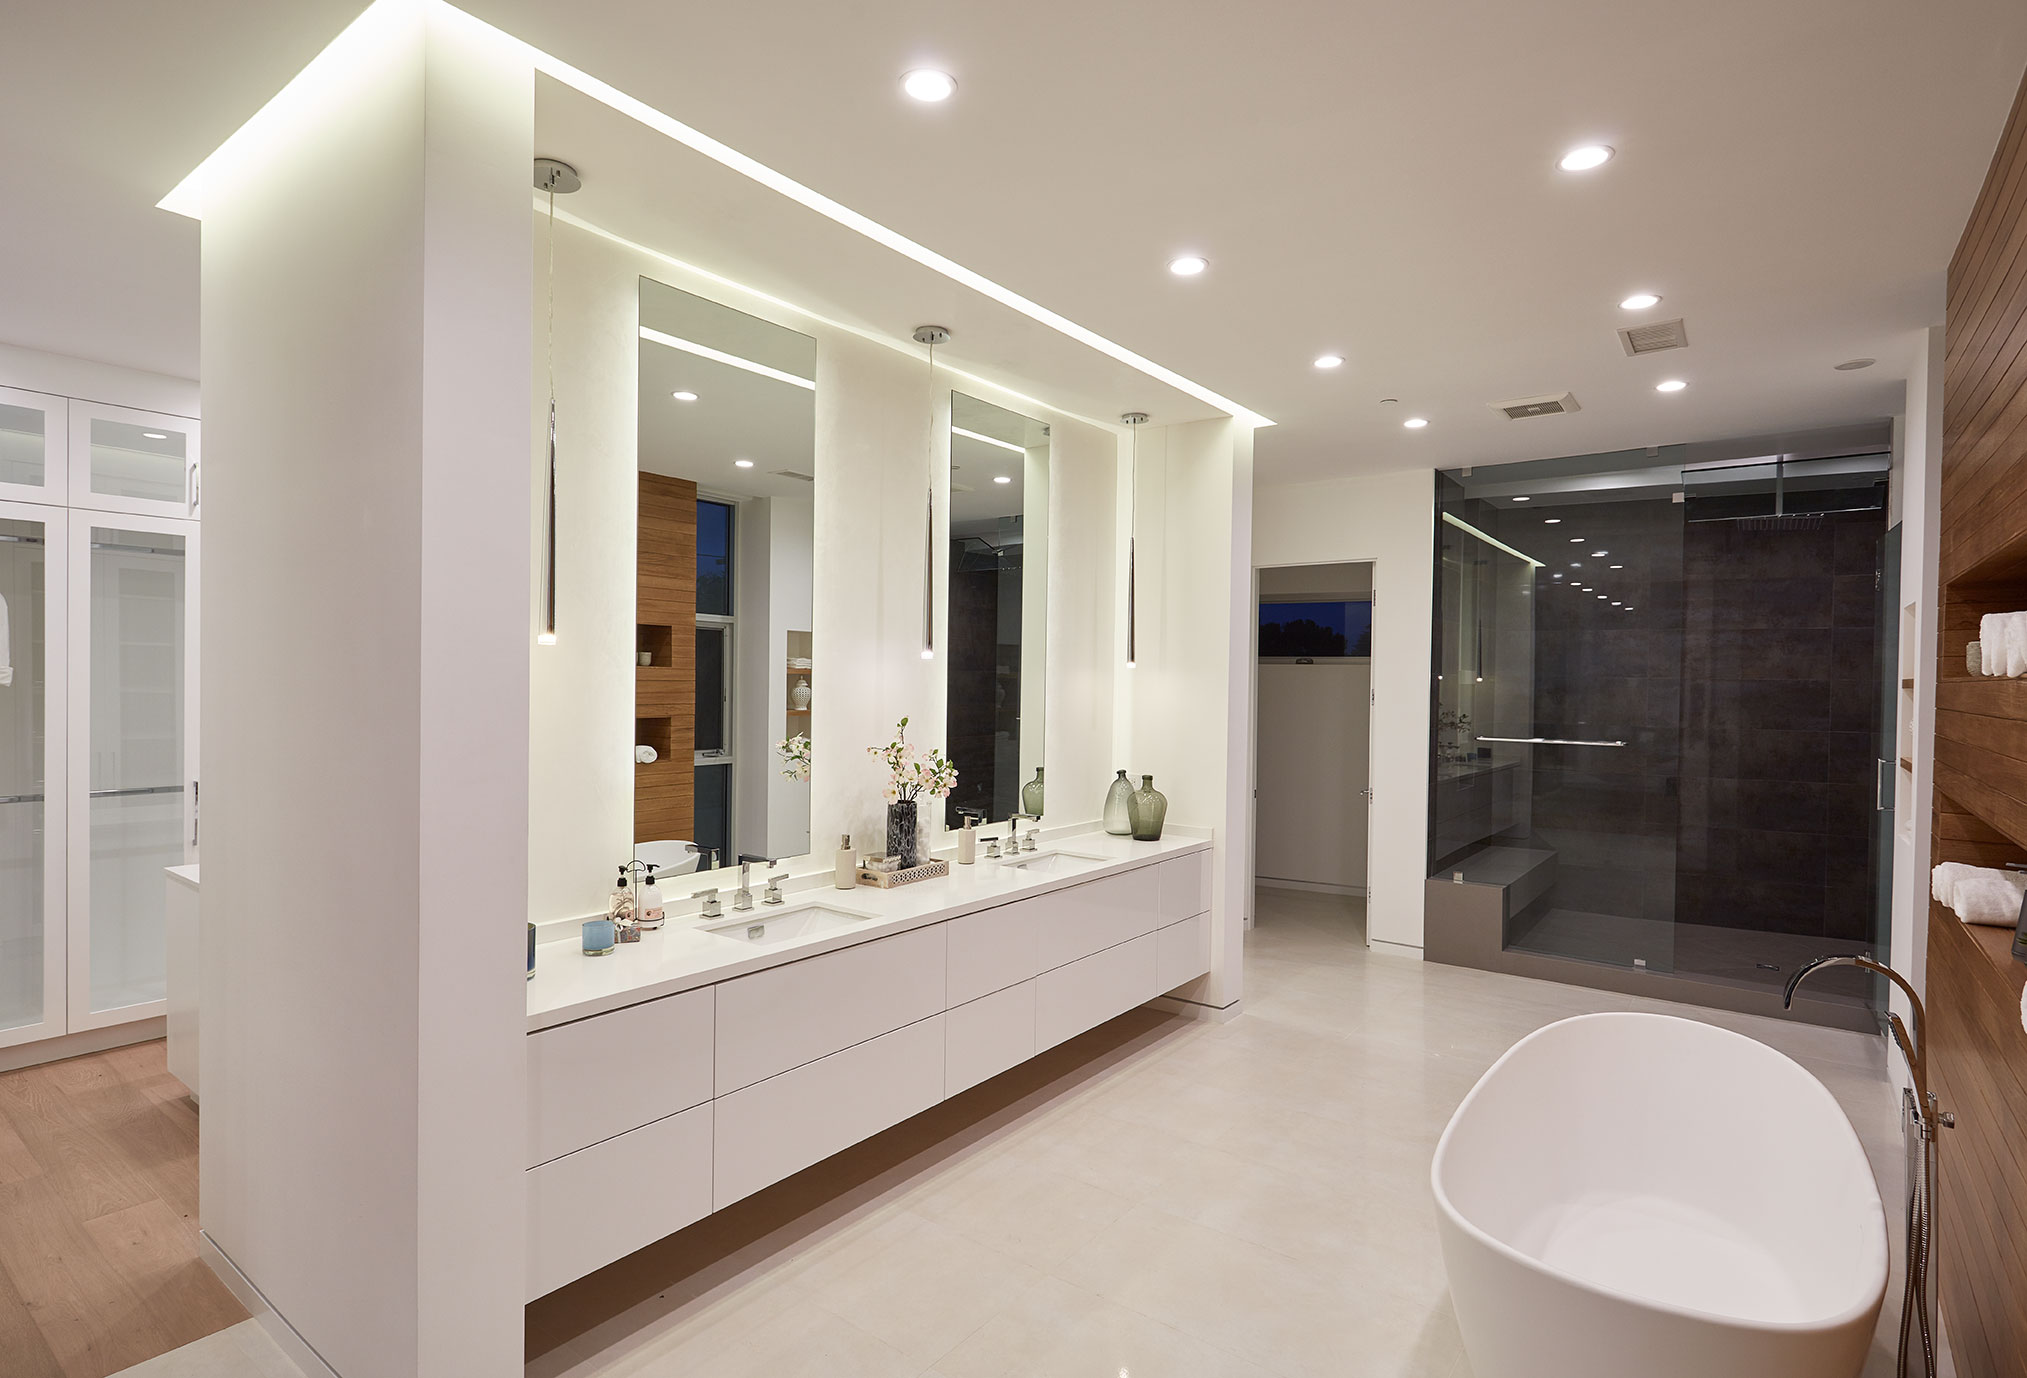 A white colored bathtub and custom glass mirrors